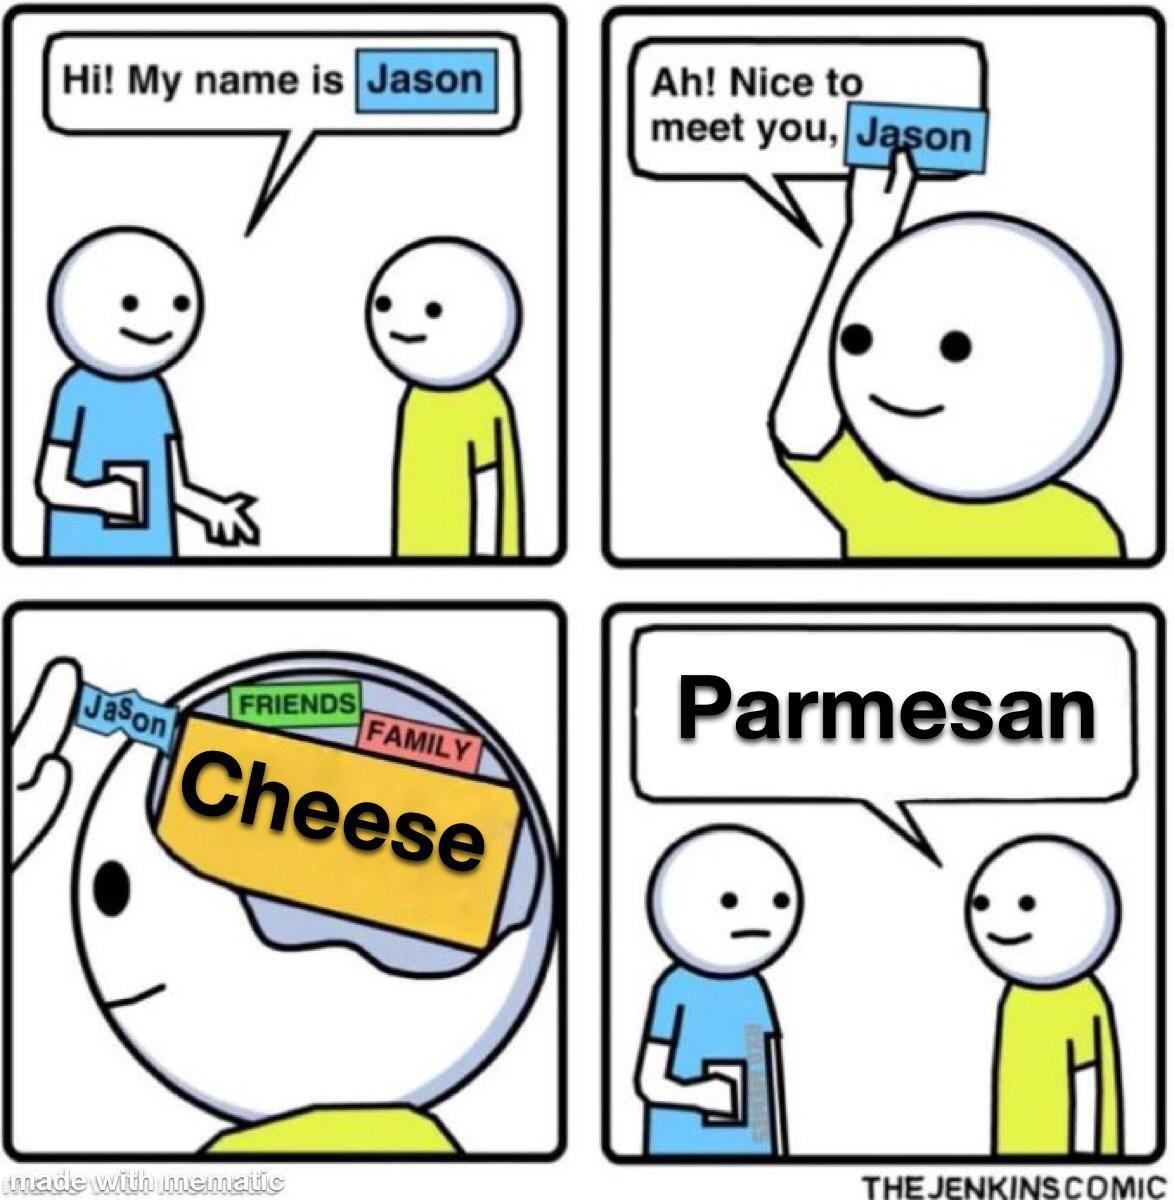 mmmmmmmh cheese